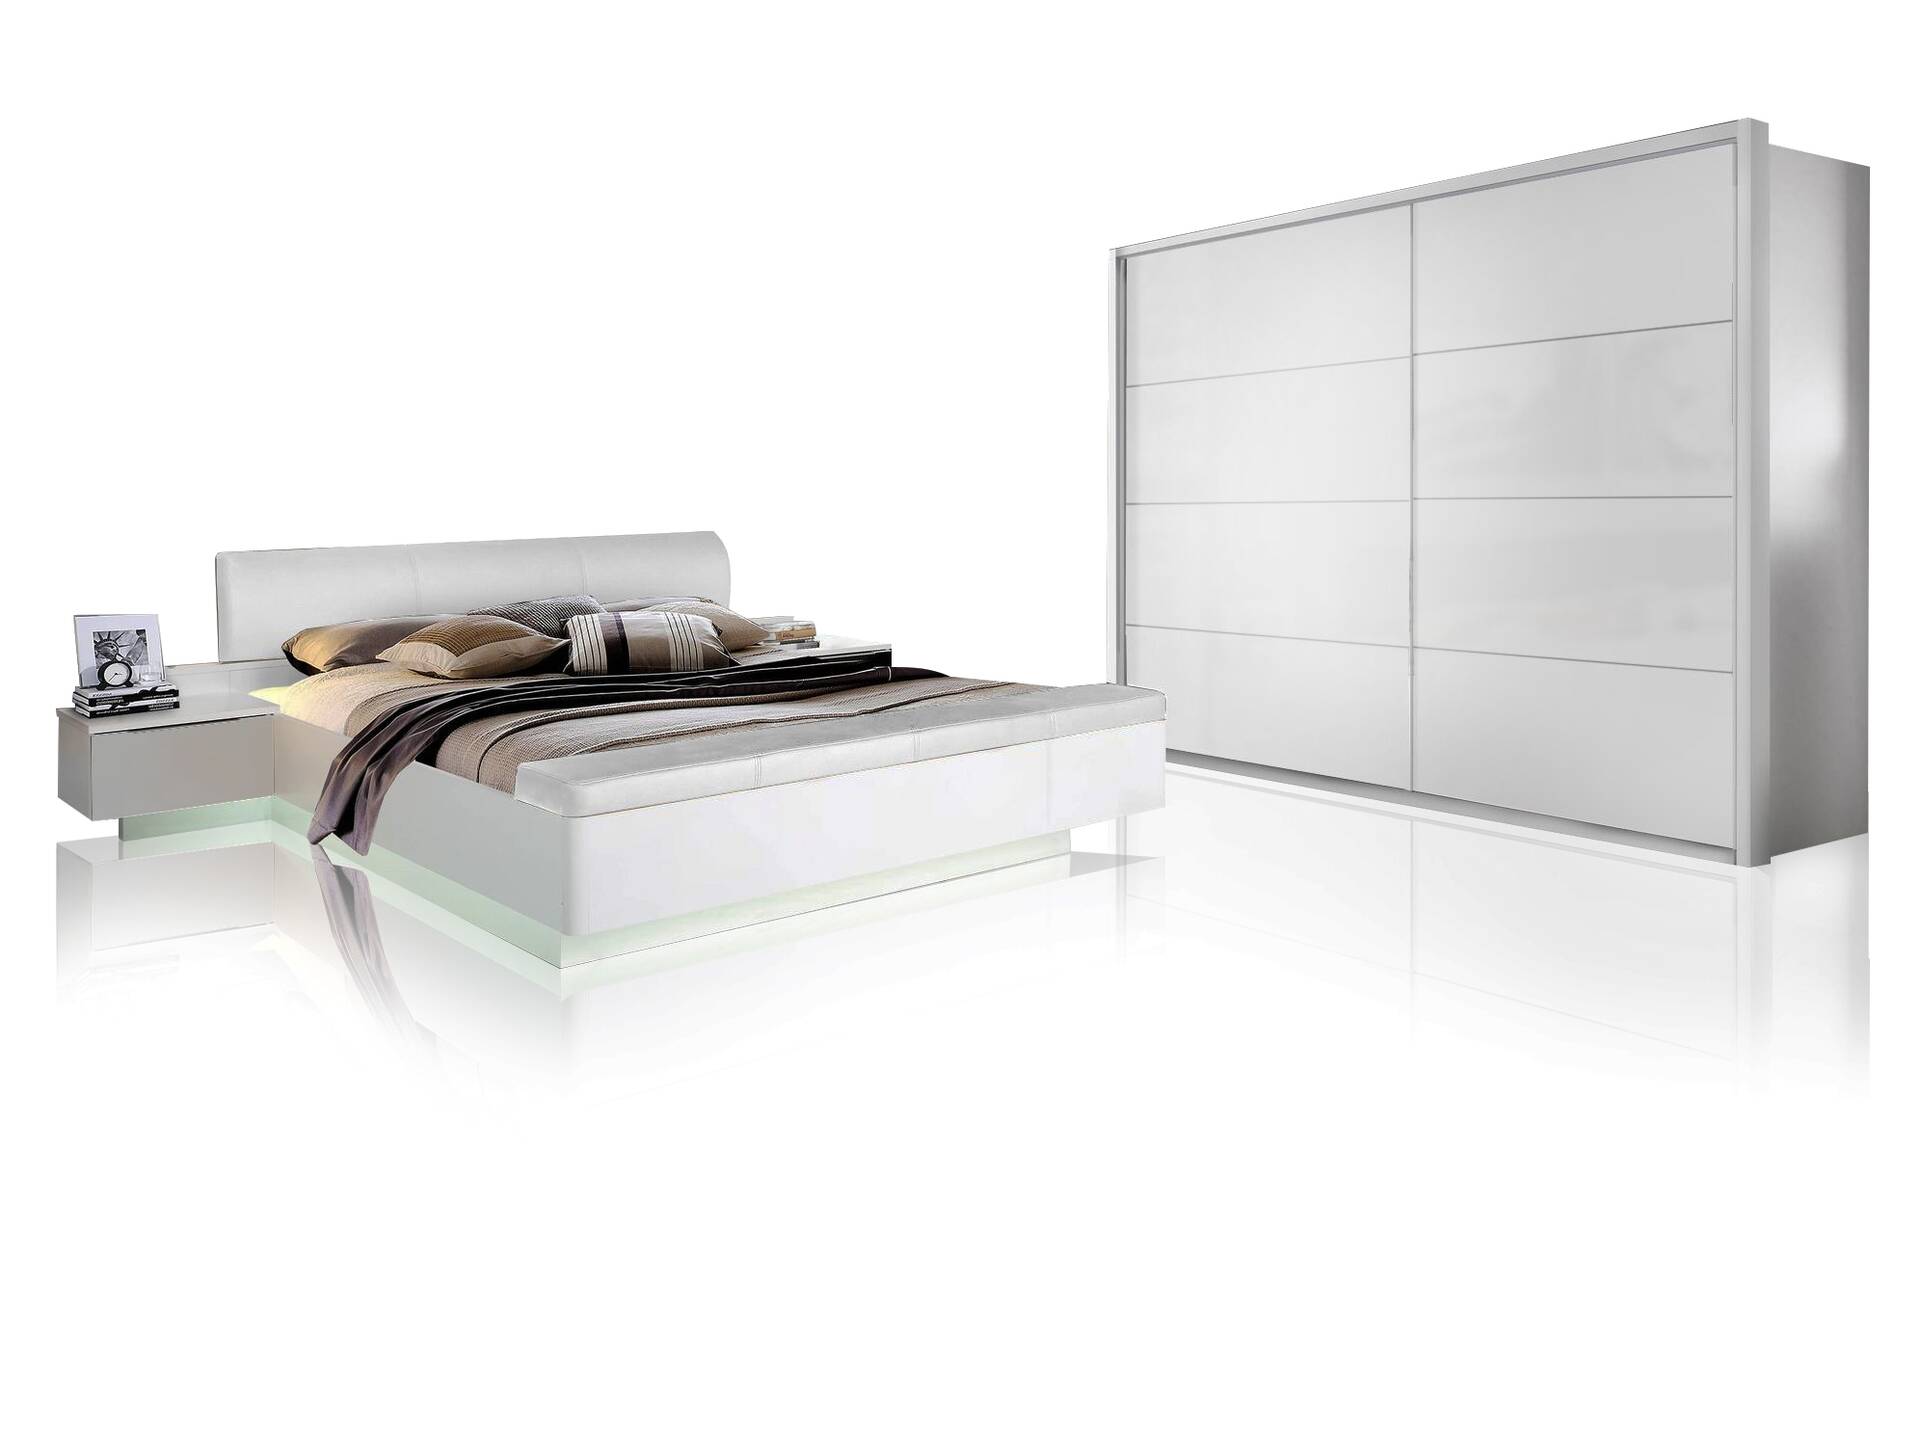 SILENT Komplett-Schlafzimmer, Material Dekorspanplatte, weiss Hochglanz,  4-teilig 